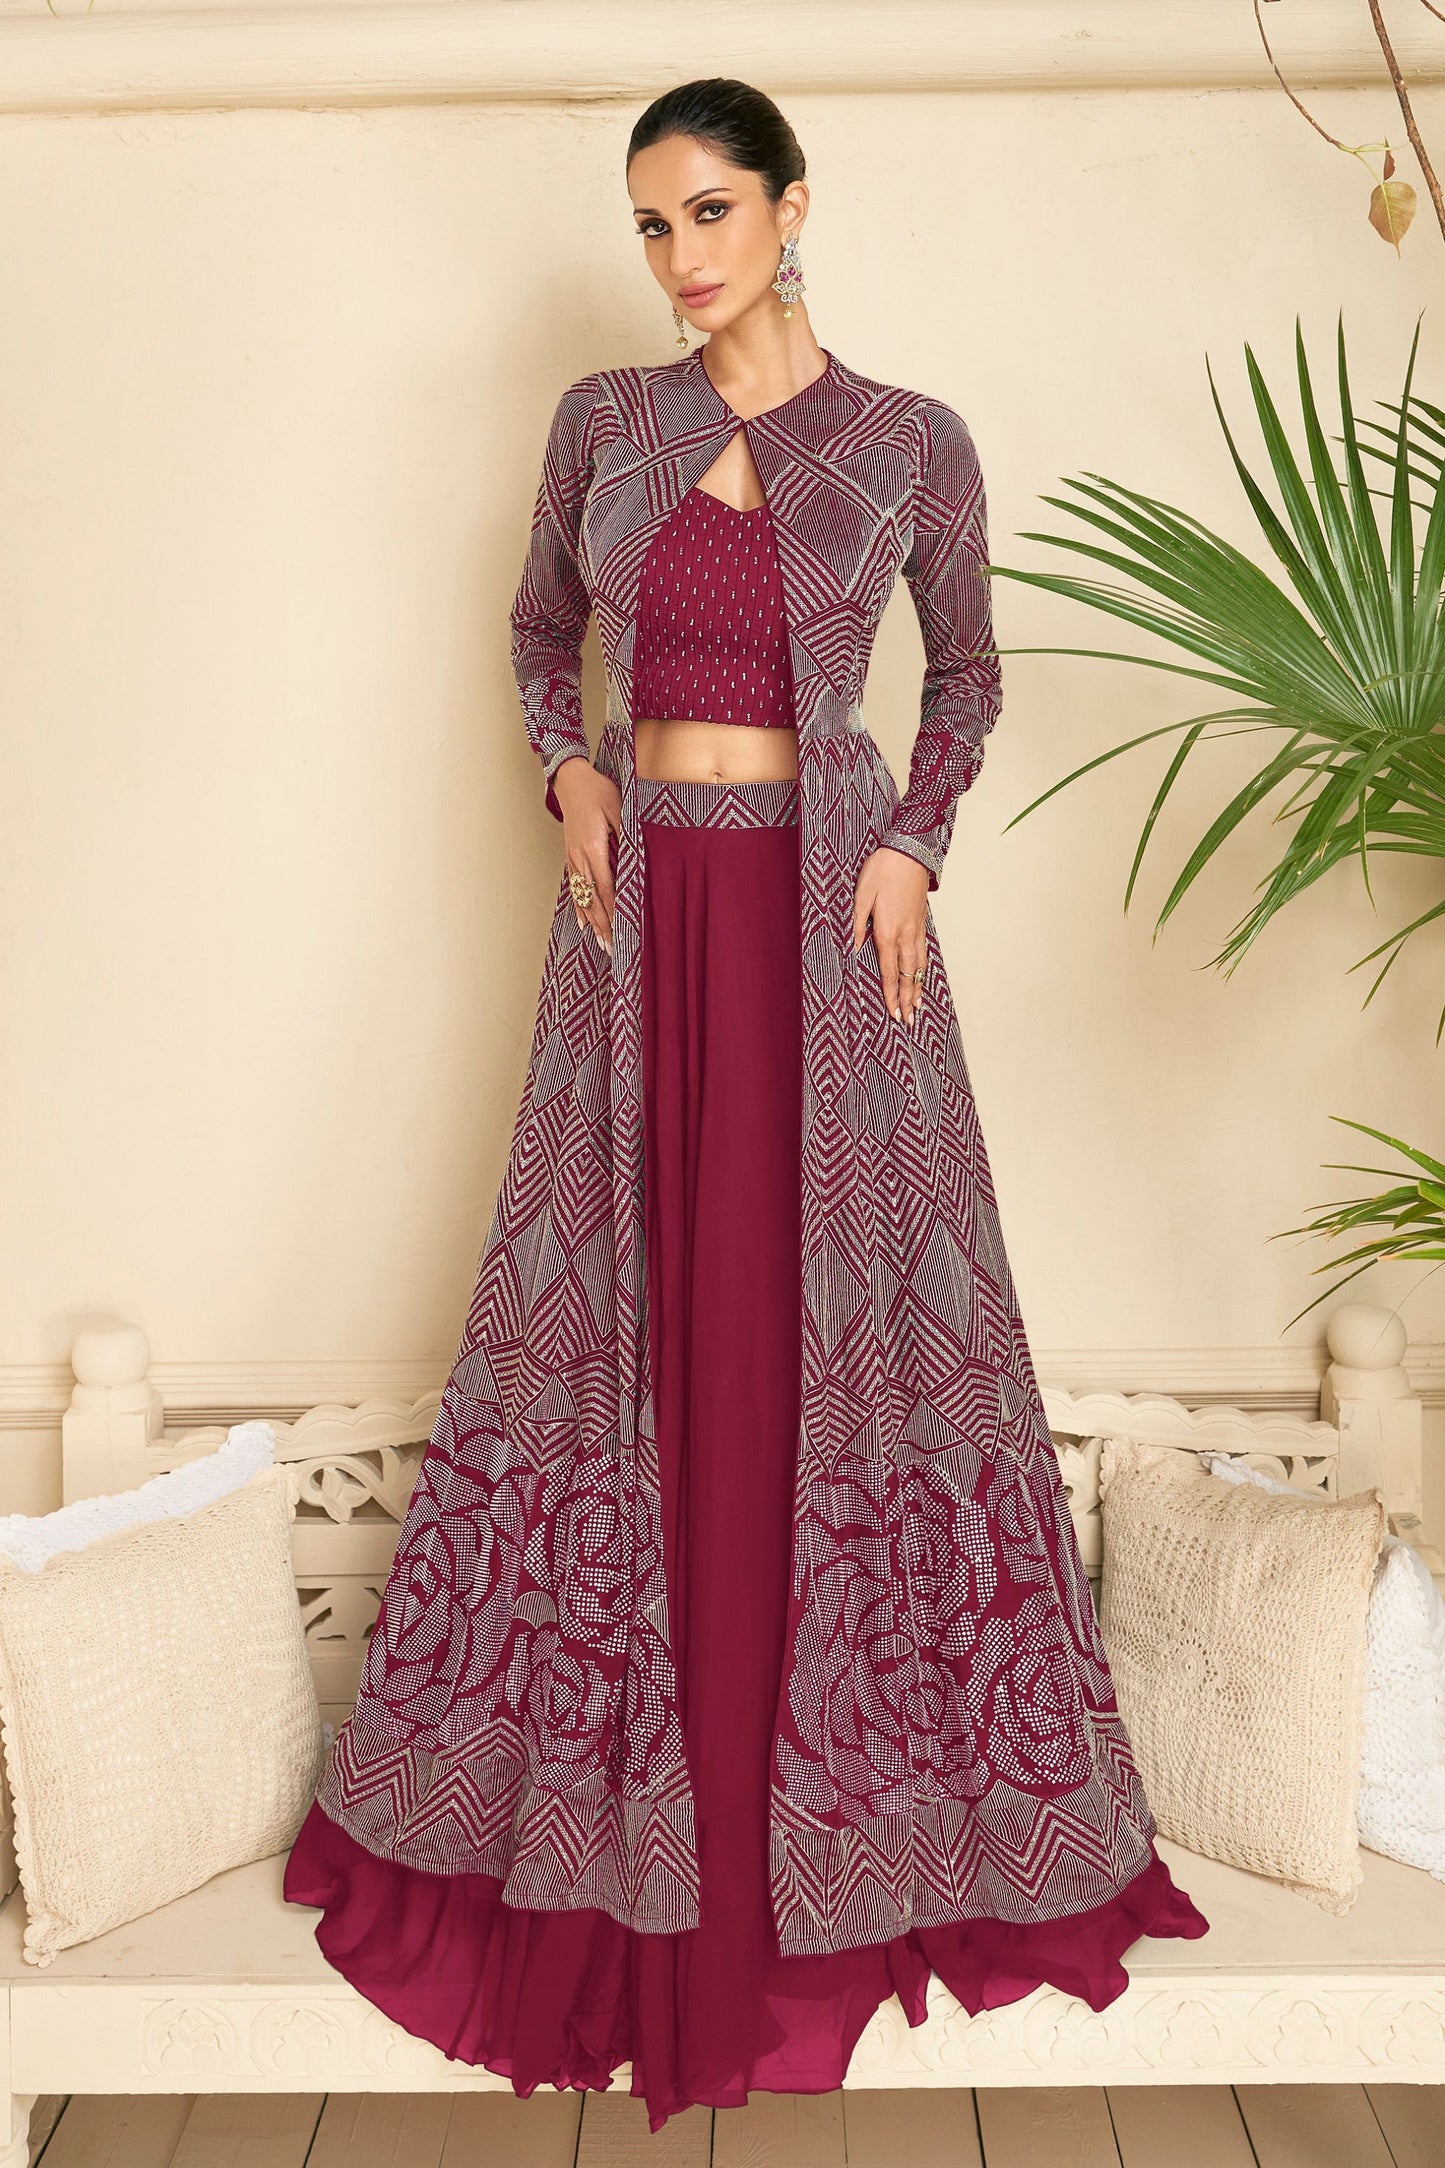 Coffee Color Lehenga Choli Suit with Koti For Indian Festivals & Pakistani Weddings - Embroidery Work